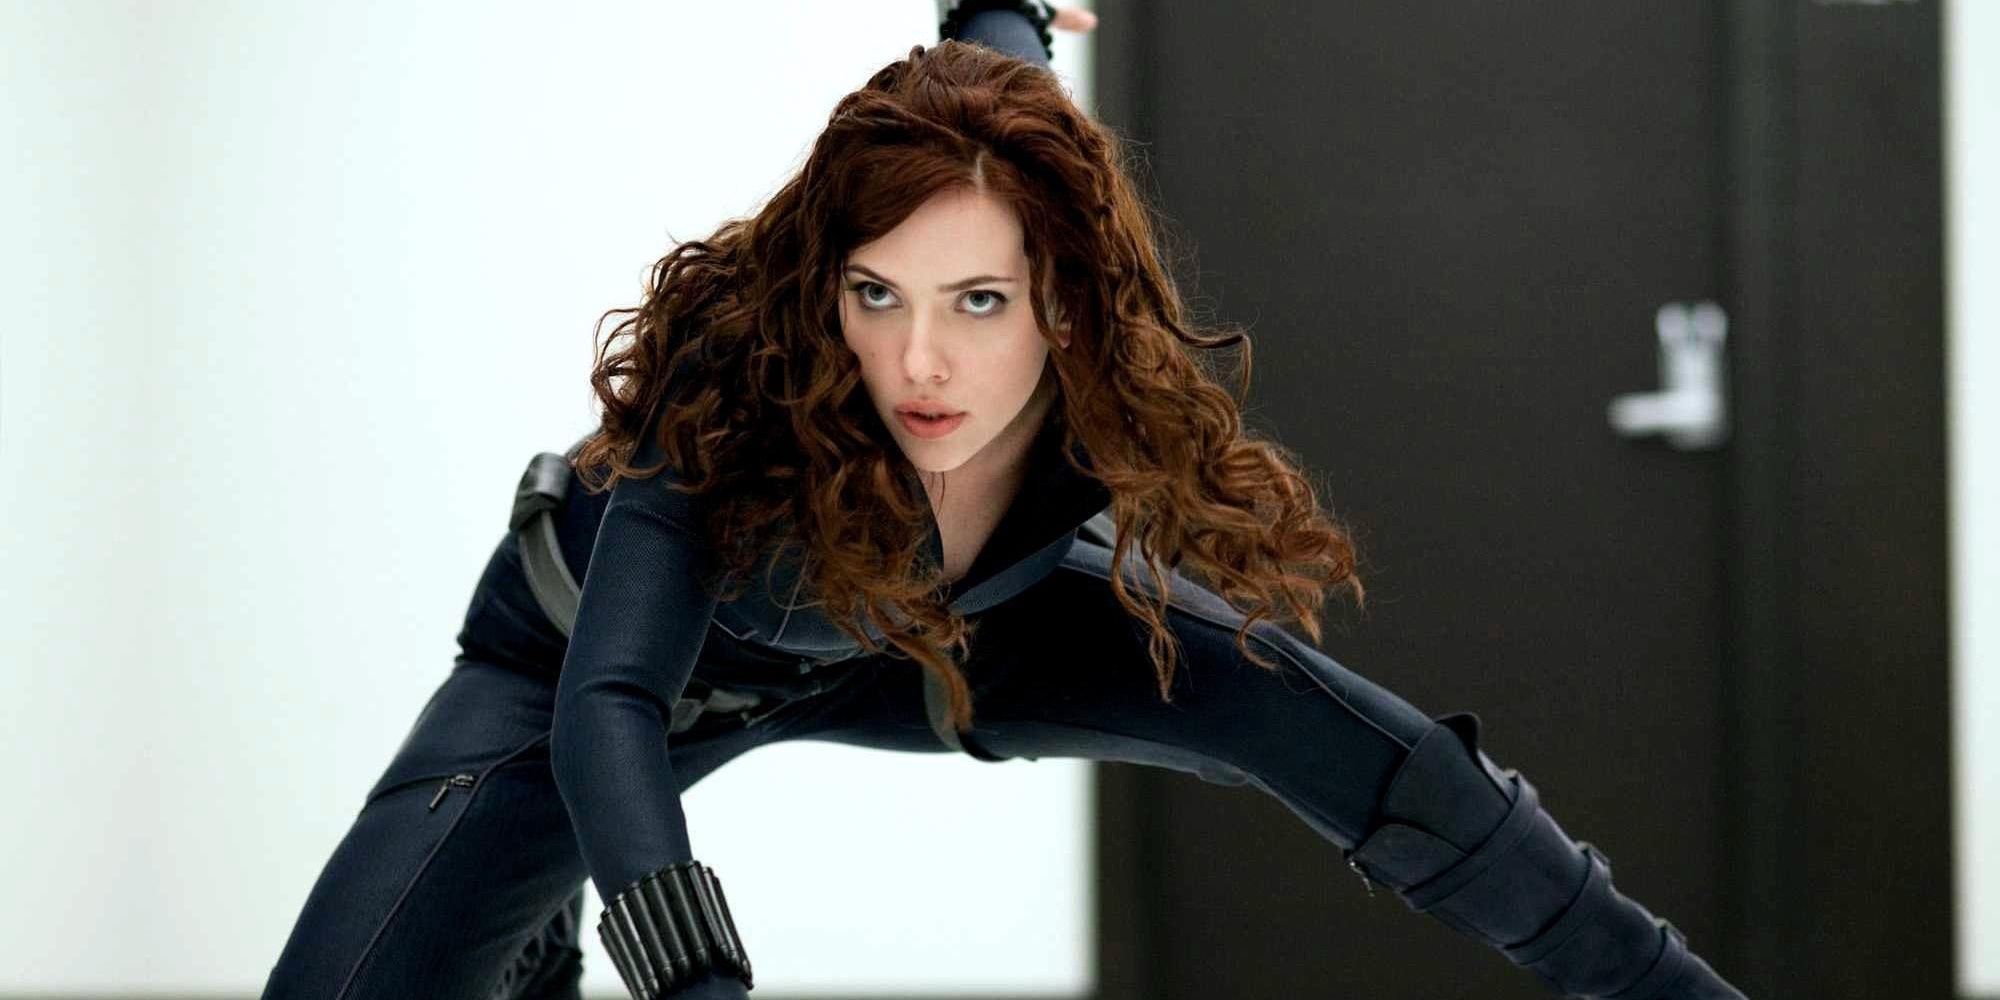 Natasha Romanoff does the black widow pose in Iron Man 2 